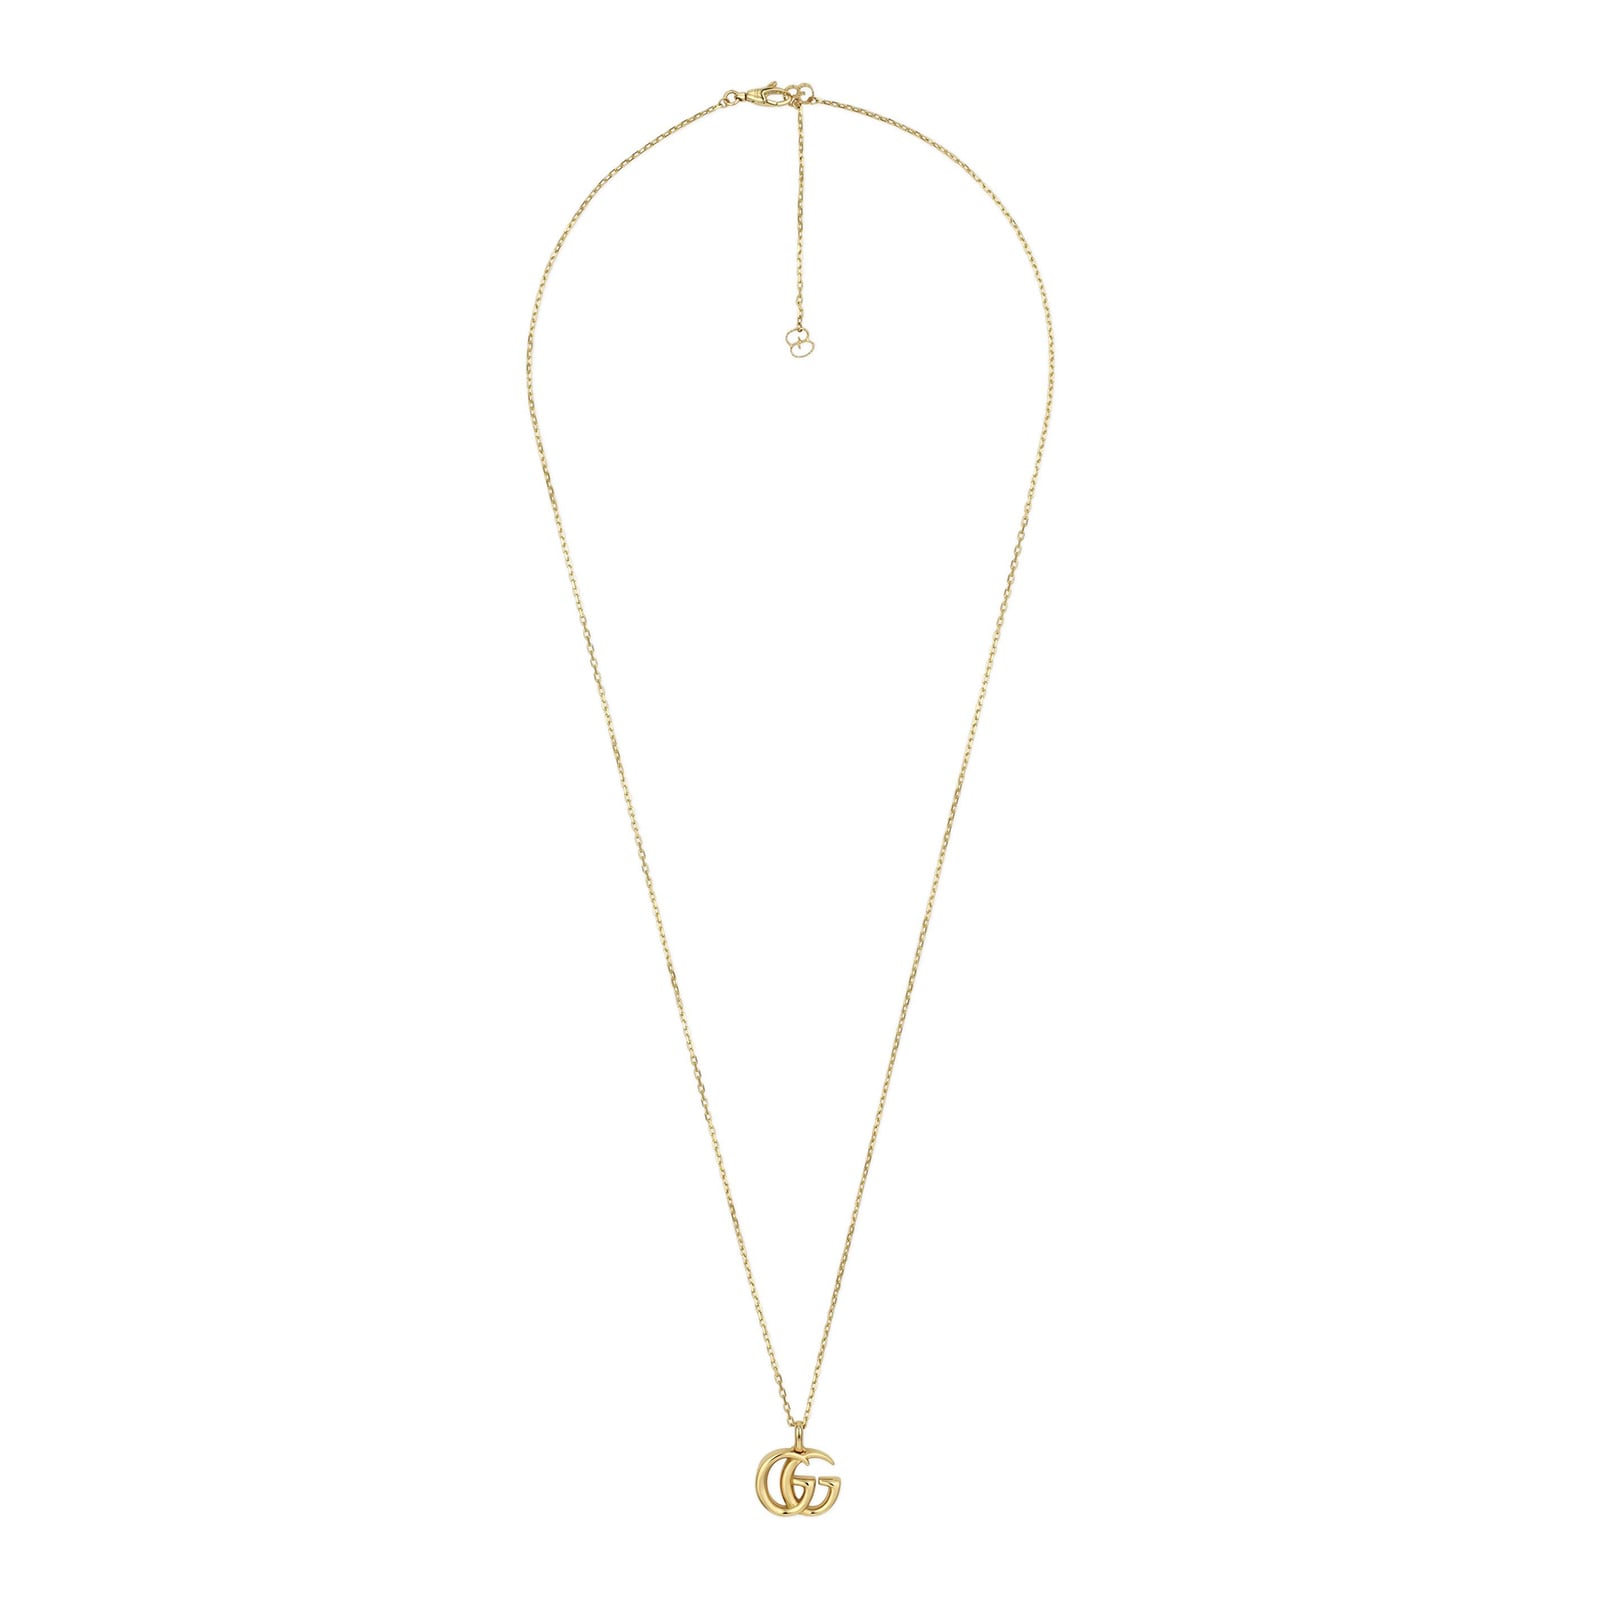 Gucci 18ct Yellow Gold Double G Small Necklace YBB50208800100U | Goldsmiths